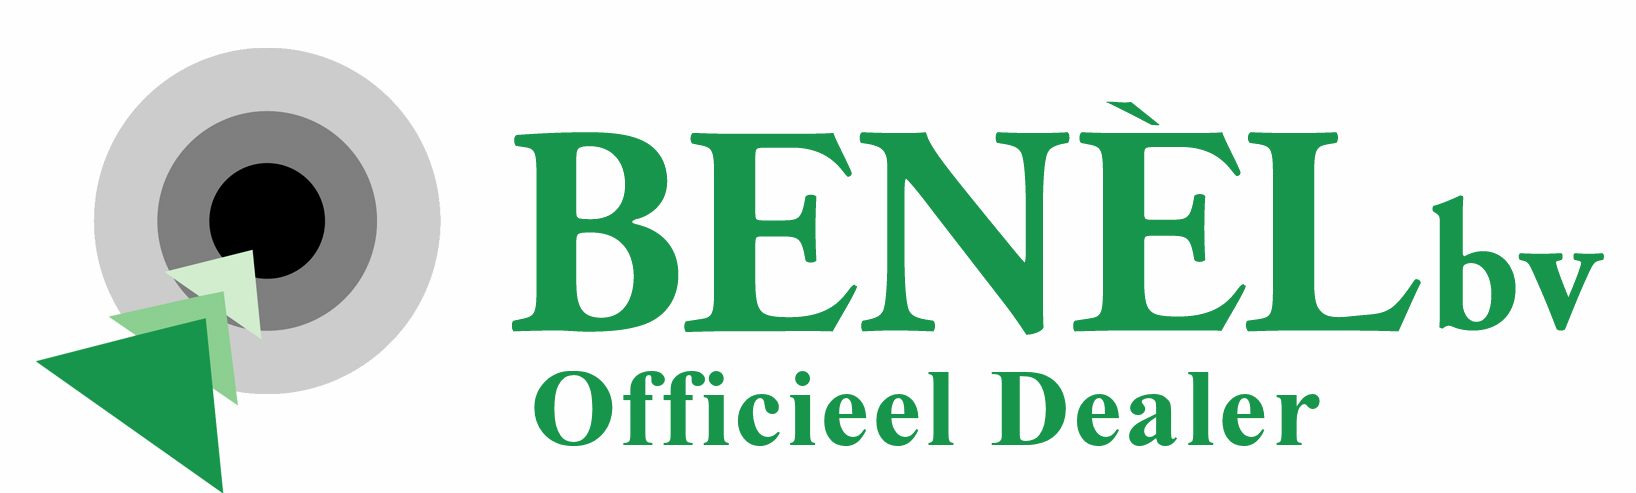 Benel Logo